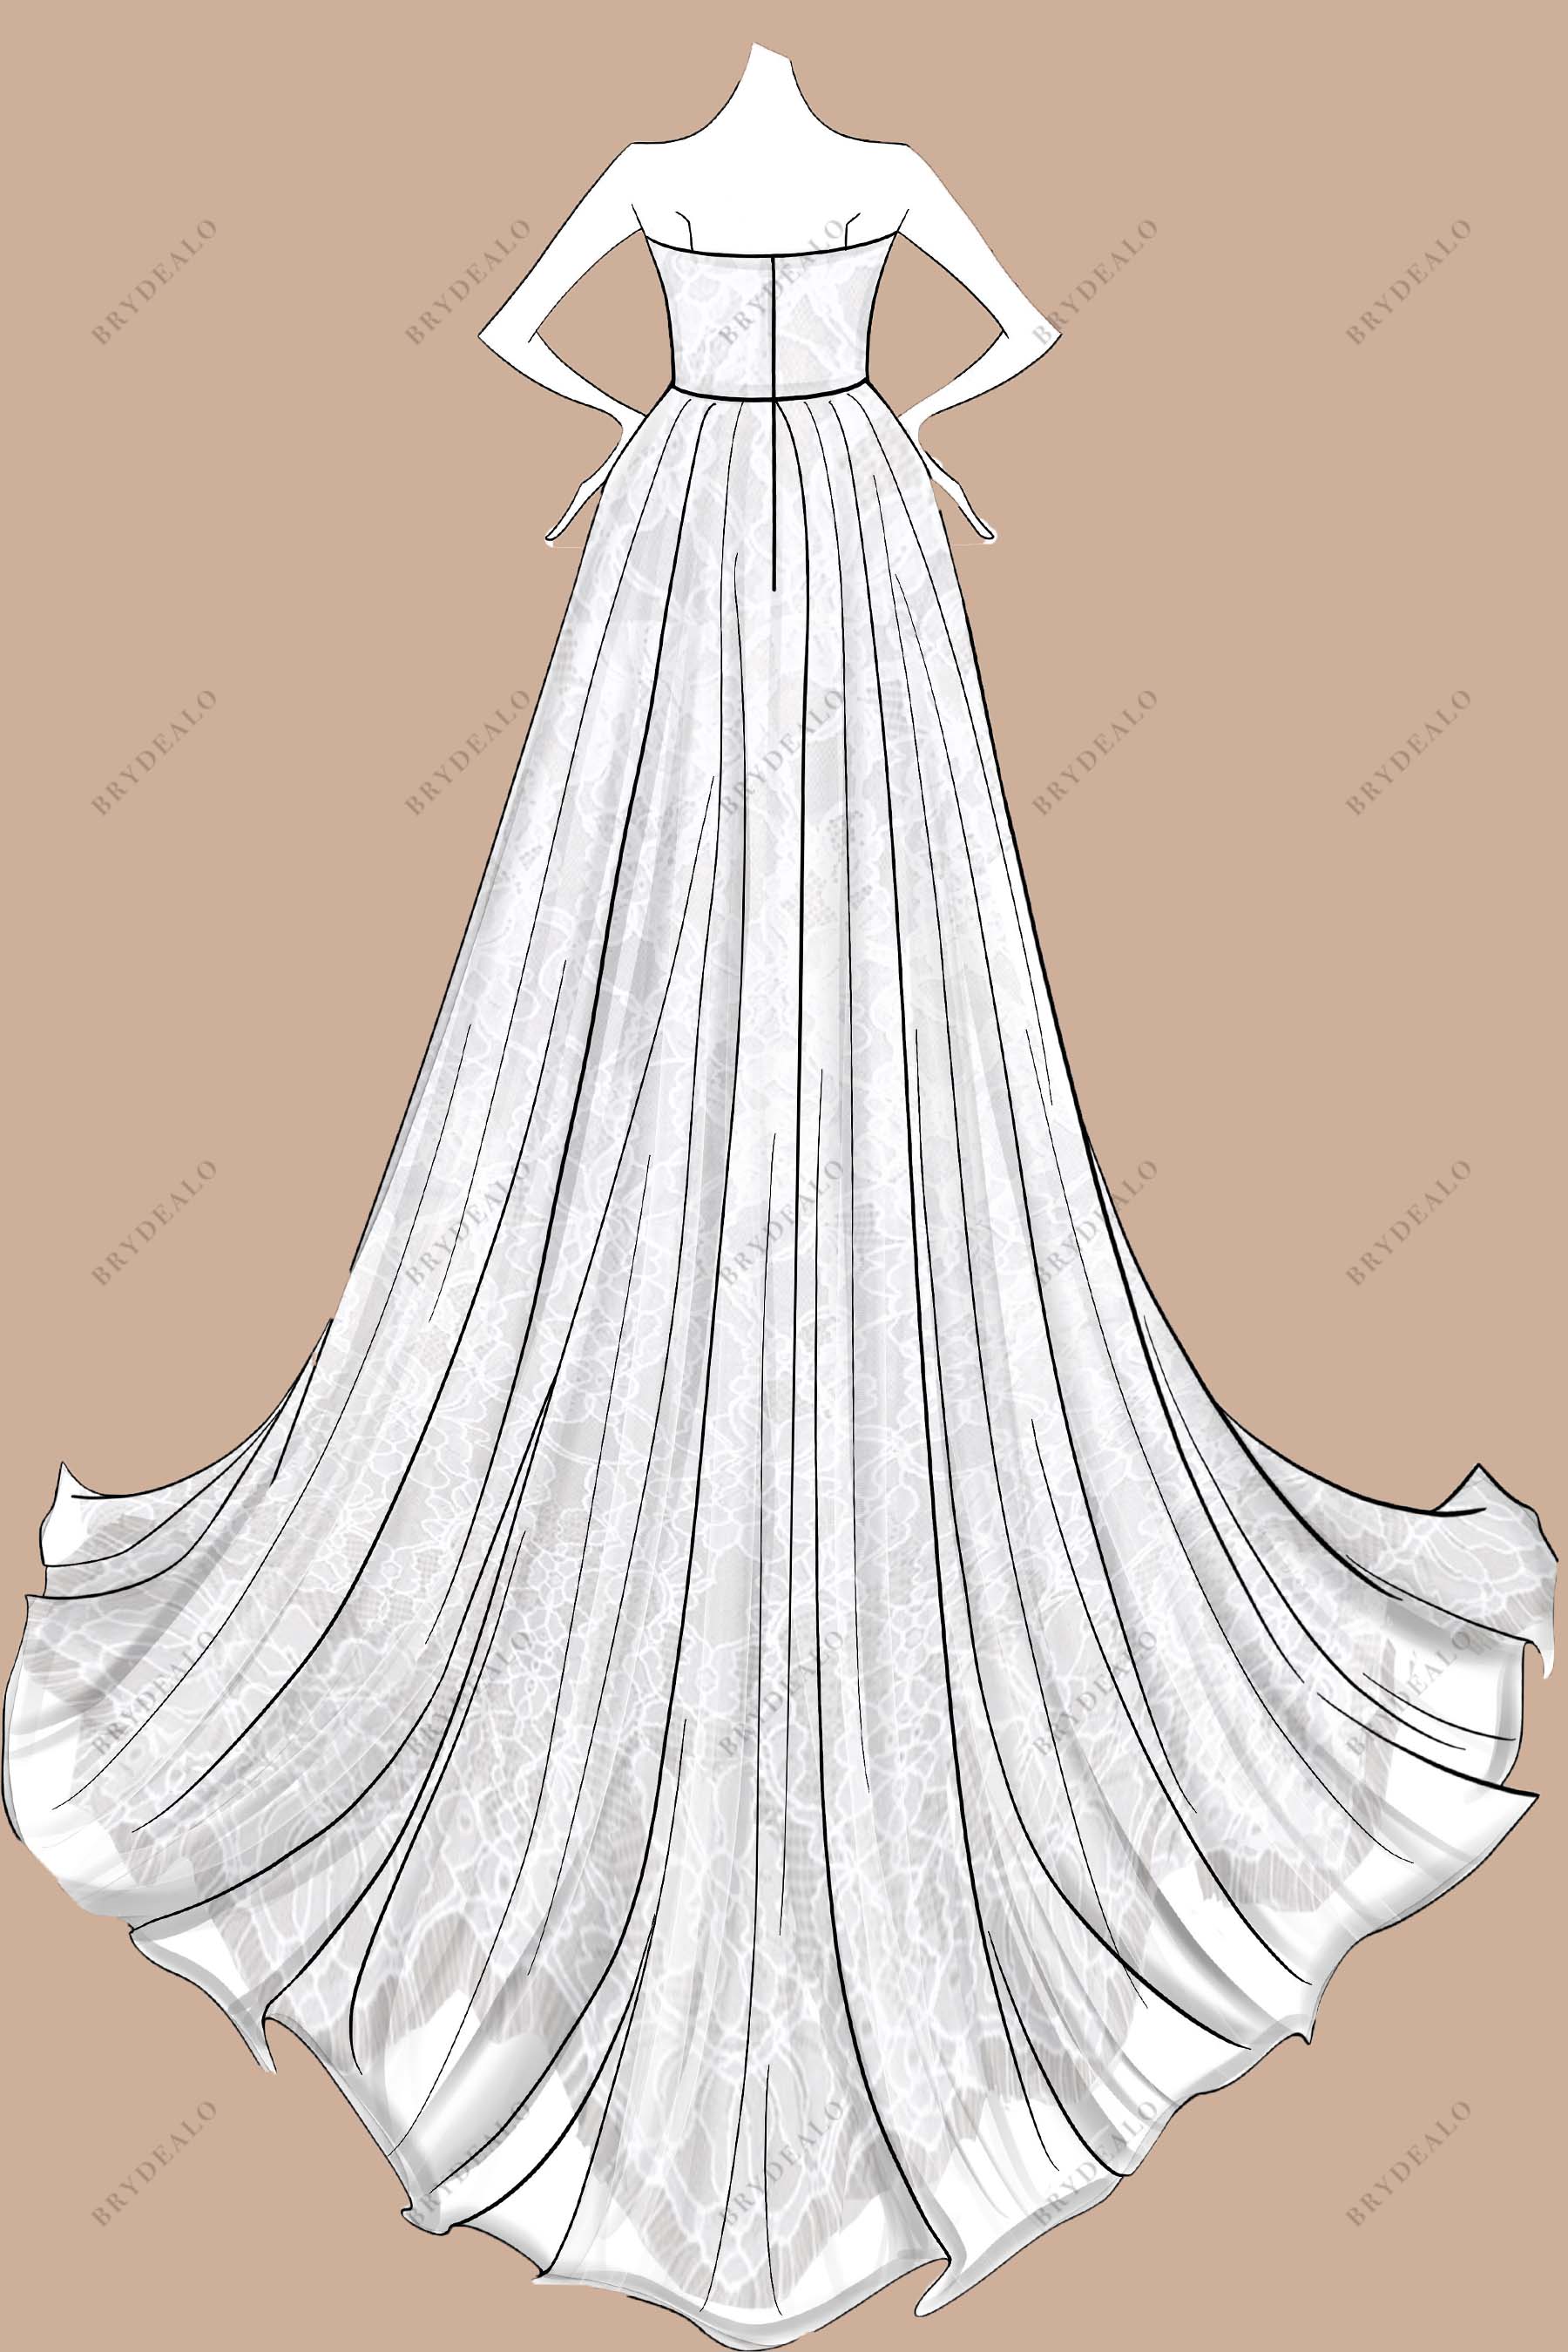 sweetheart train strapless long A-line wedding dress sketch